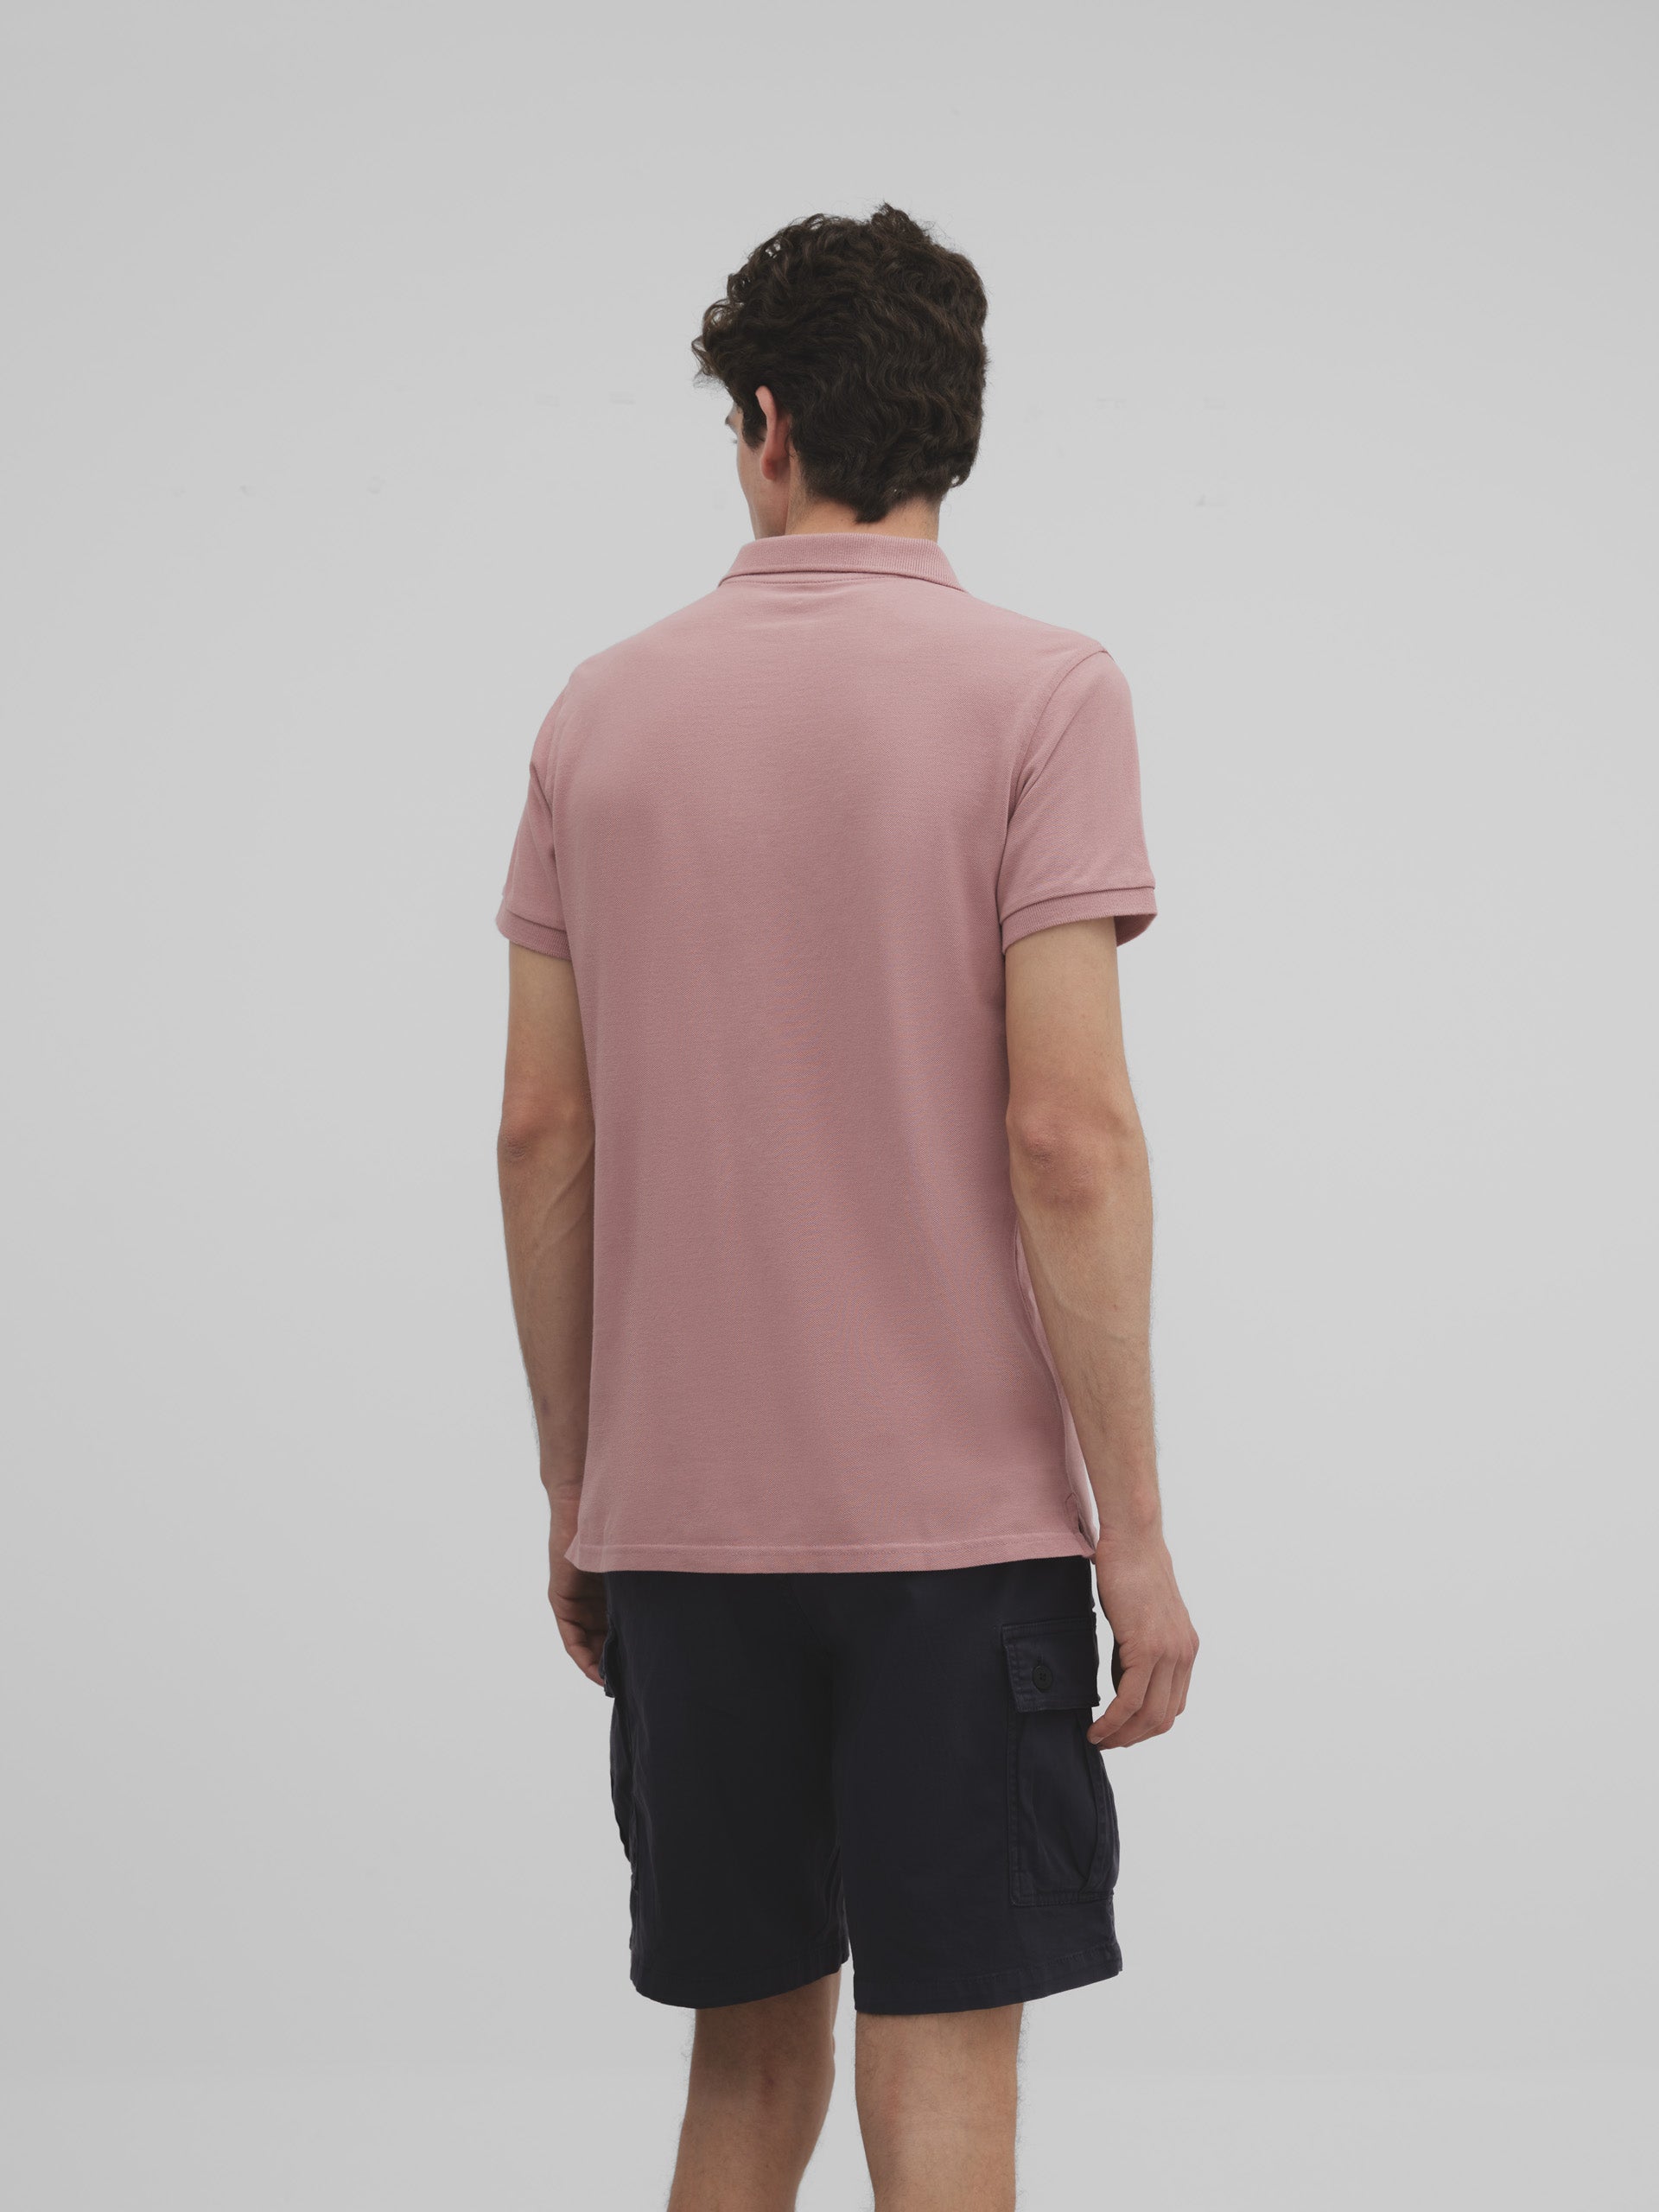 Classic plain pink polo shirt